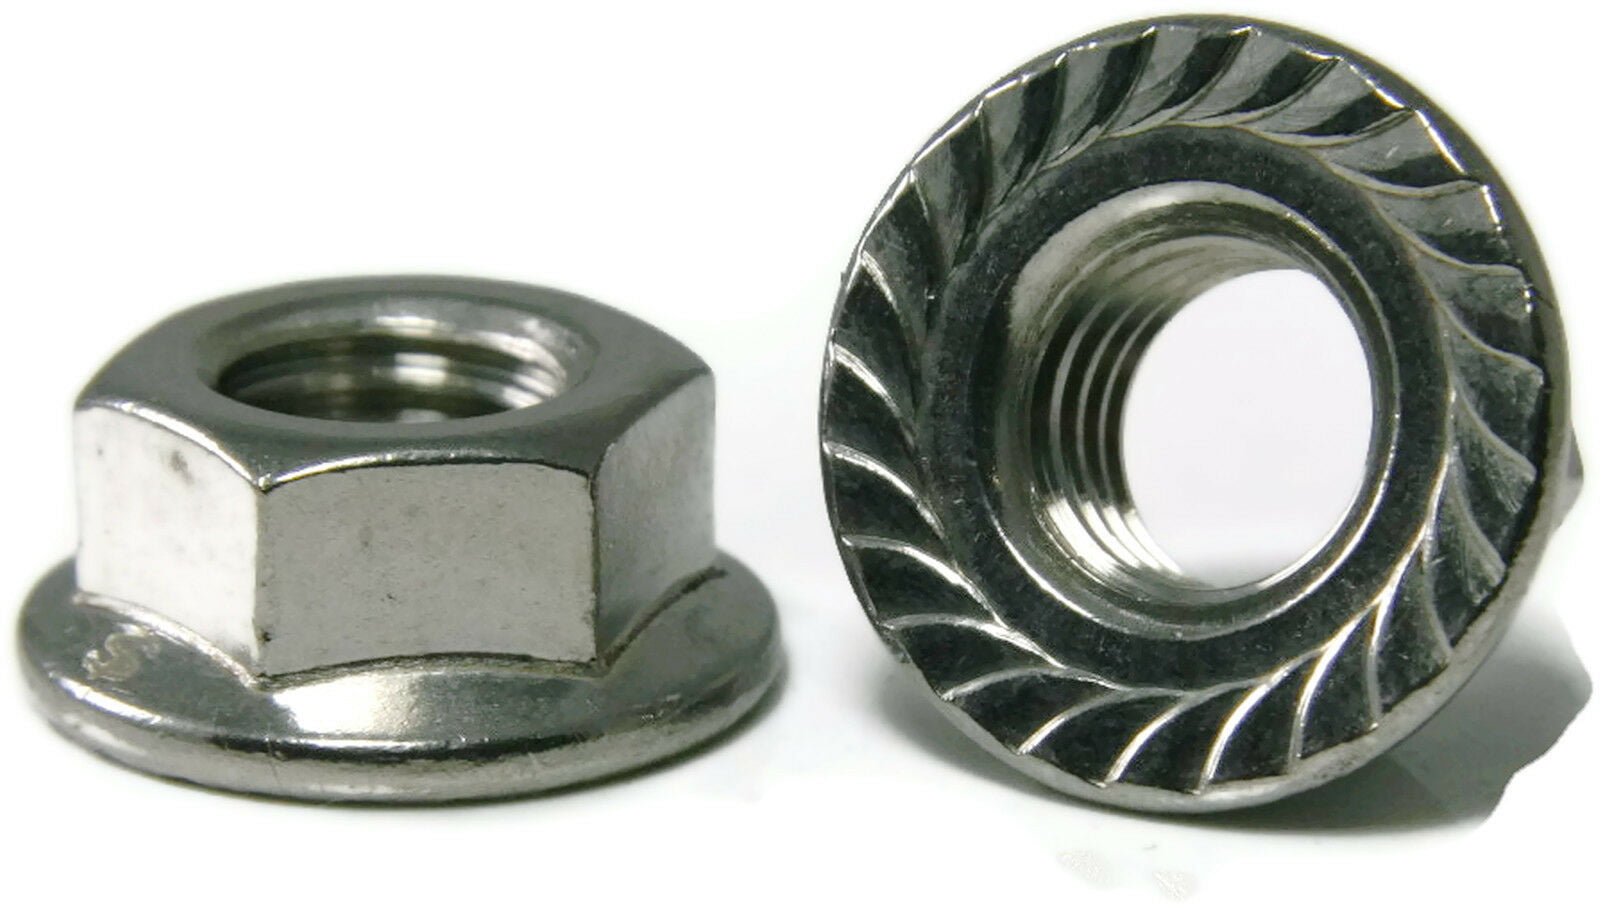 Qty 50 Stainless Steel Nylon Insert Lock Hex Nut UNF 5/16-24 